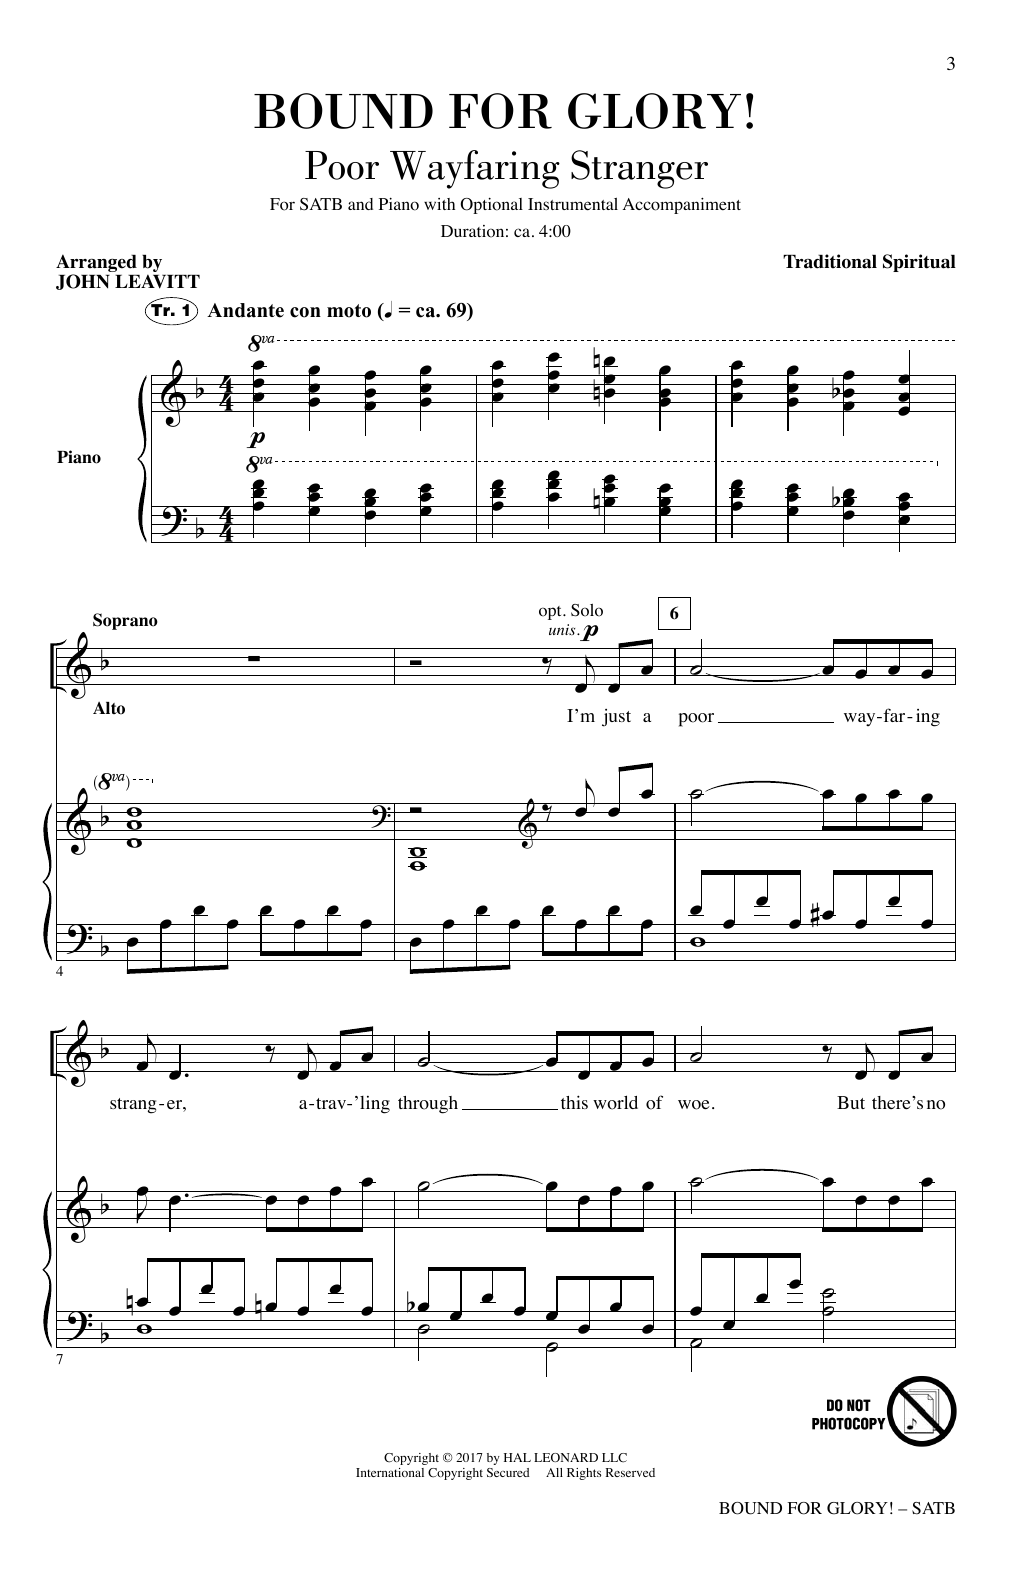 John Leavitt Bound For Glory! Sheet Music Notes & Chords for SSA - Download or Print PDF